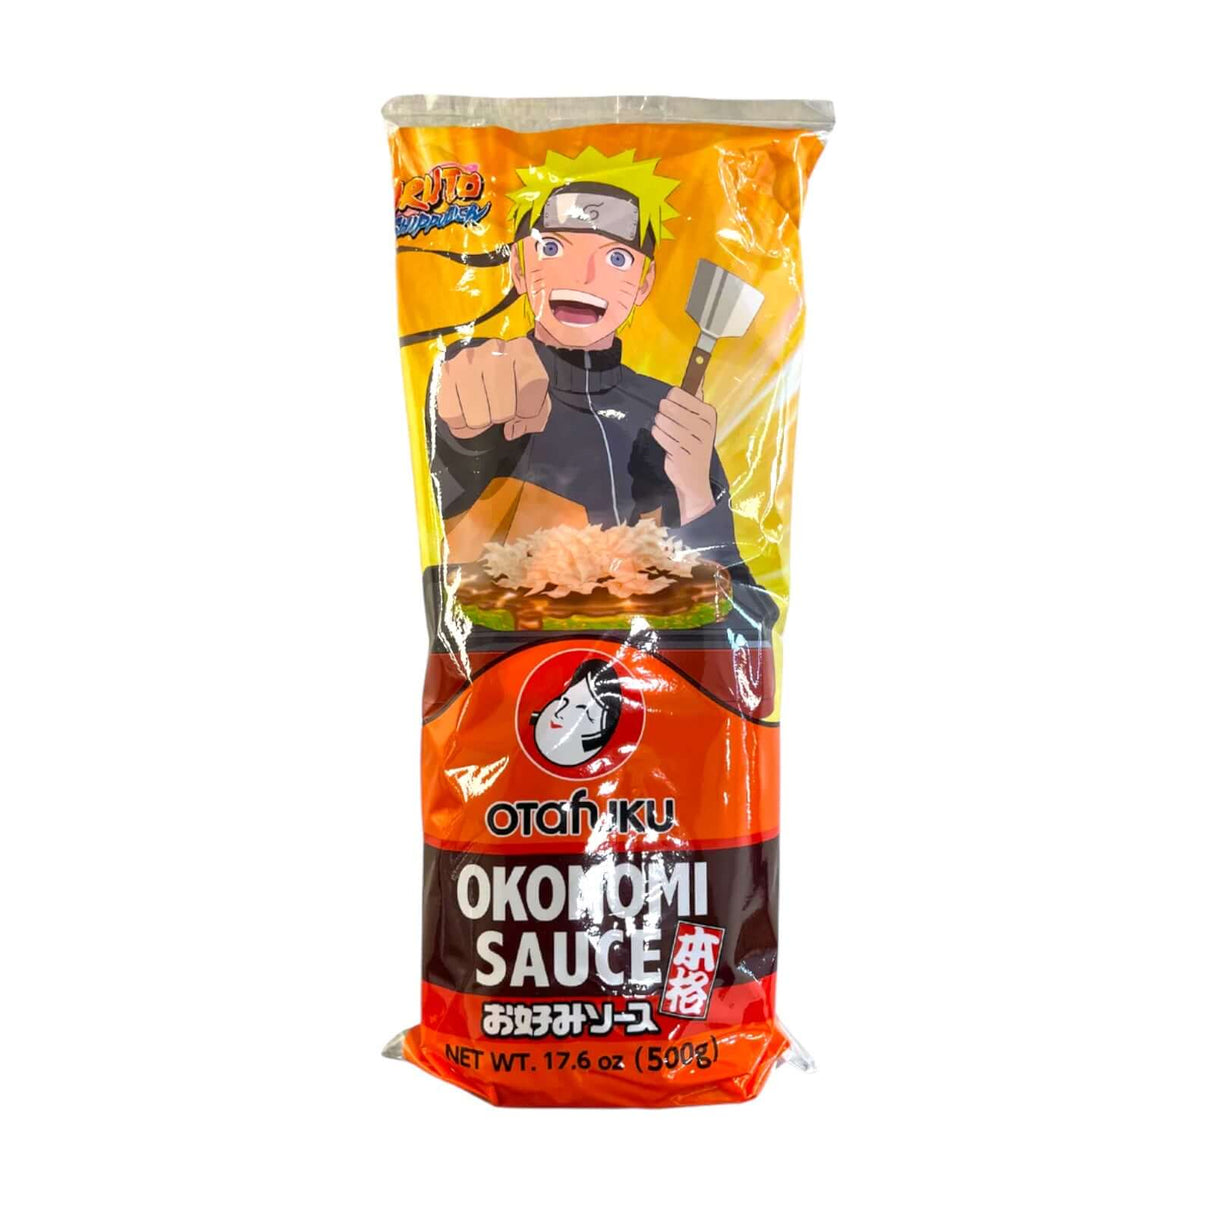 Otafuku Naruto Okonomi Sauce For Dipping